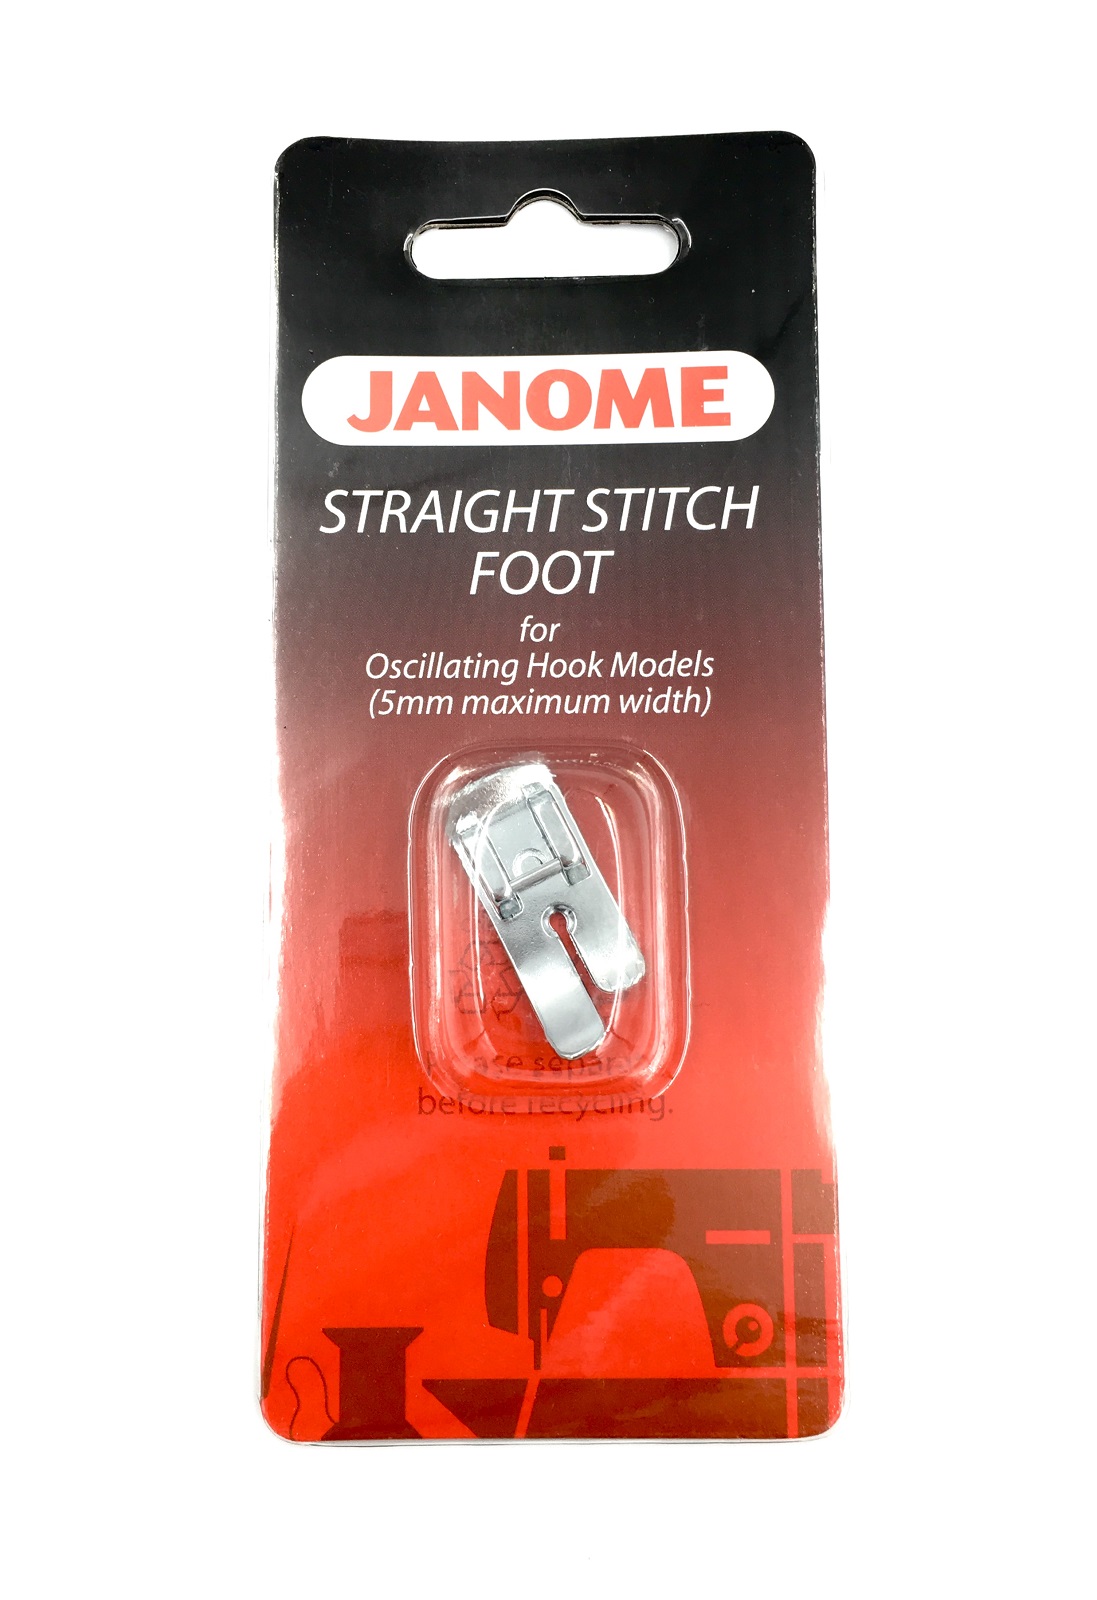 Straight Stitch Foot